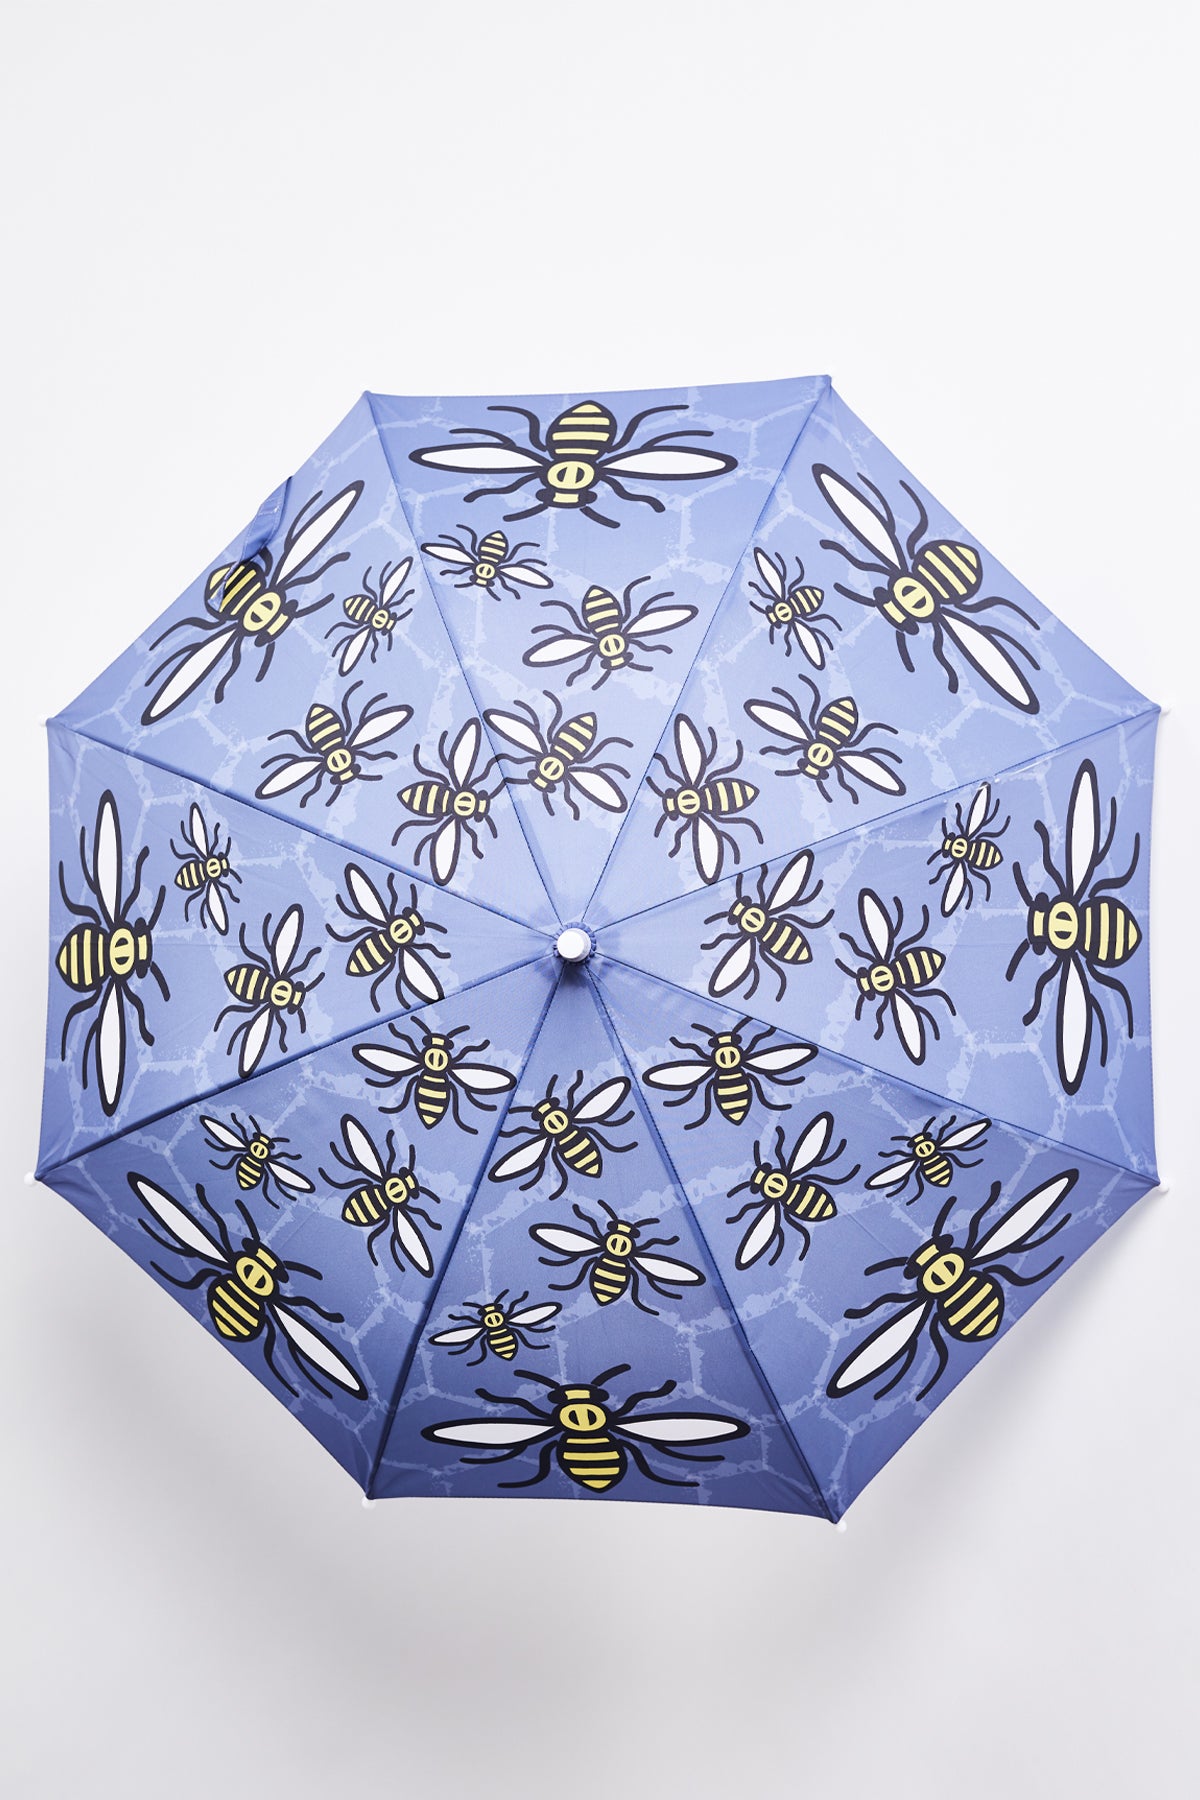 GRASS & AIR - Colour Revealing Bee Umbrella